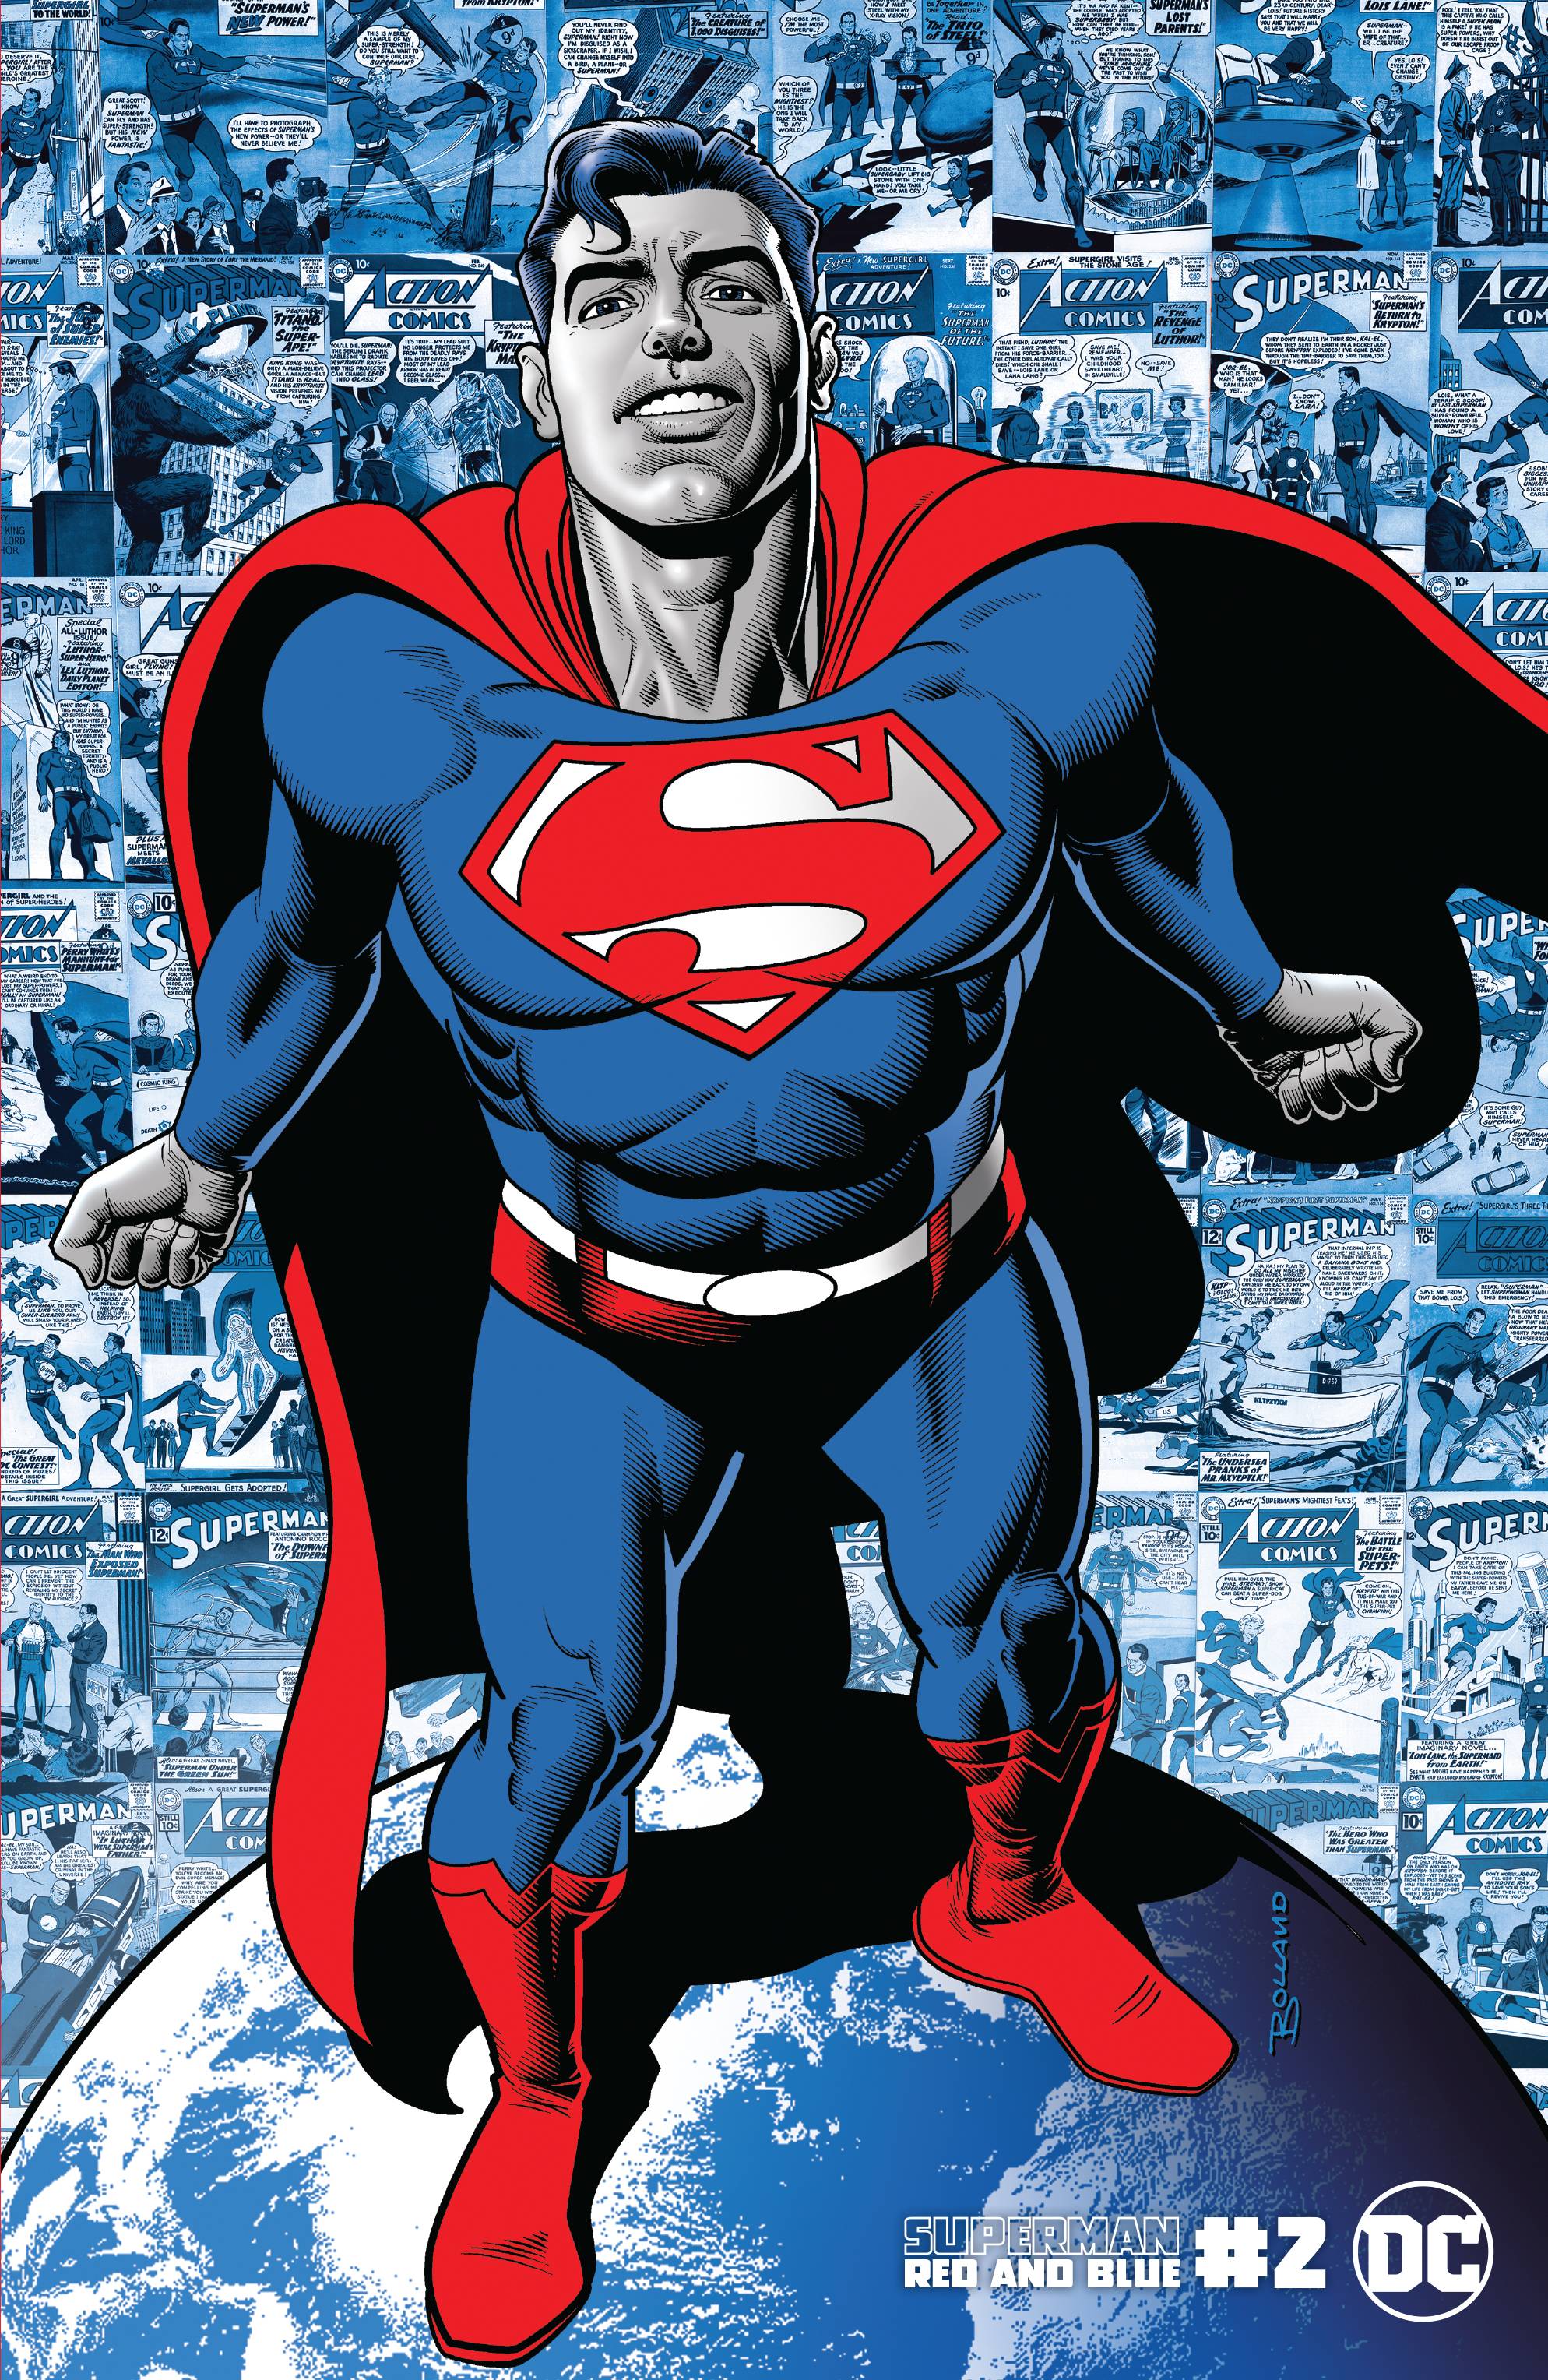 SUPERMAN RED & BLUE #2 CVR B BOLLAND